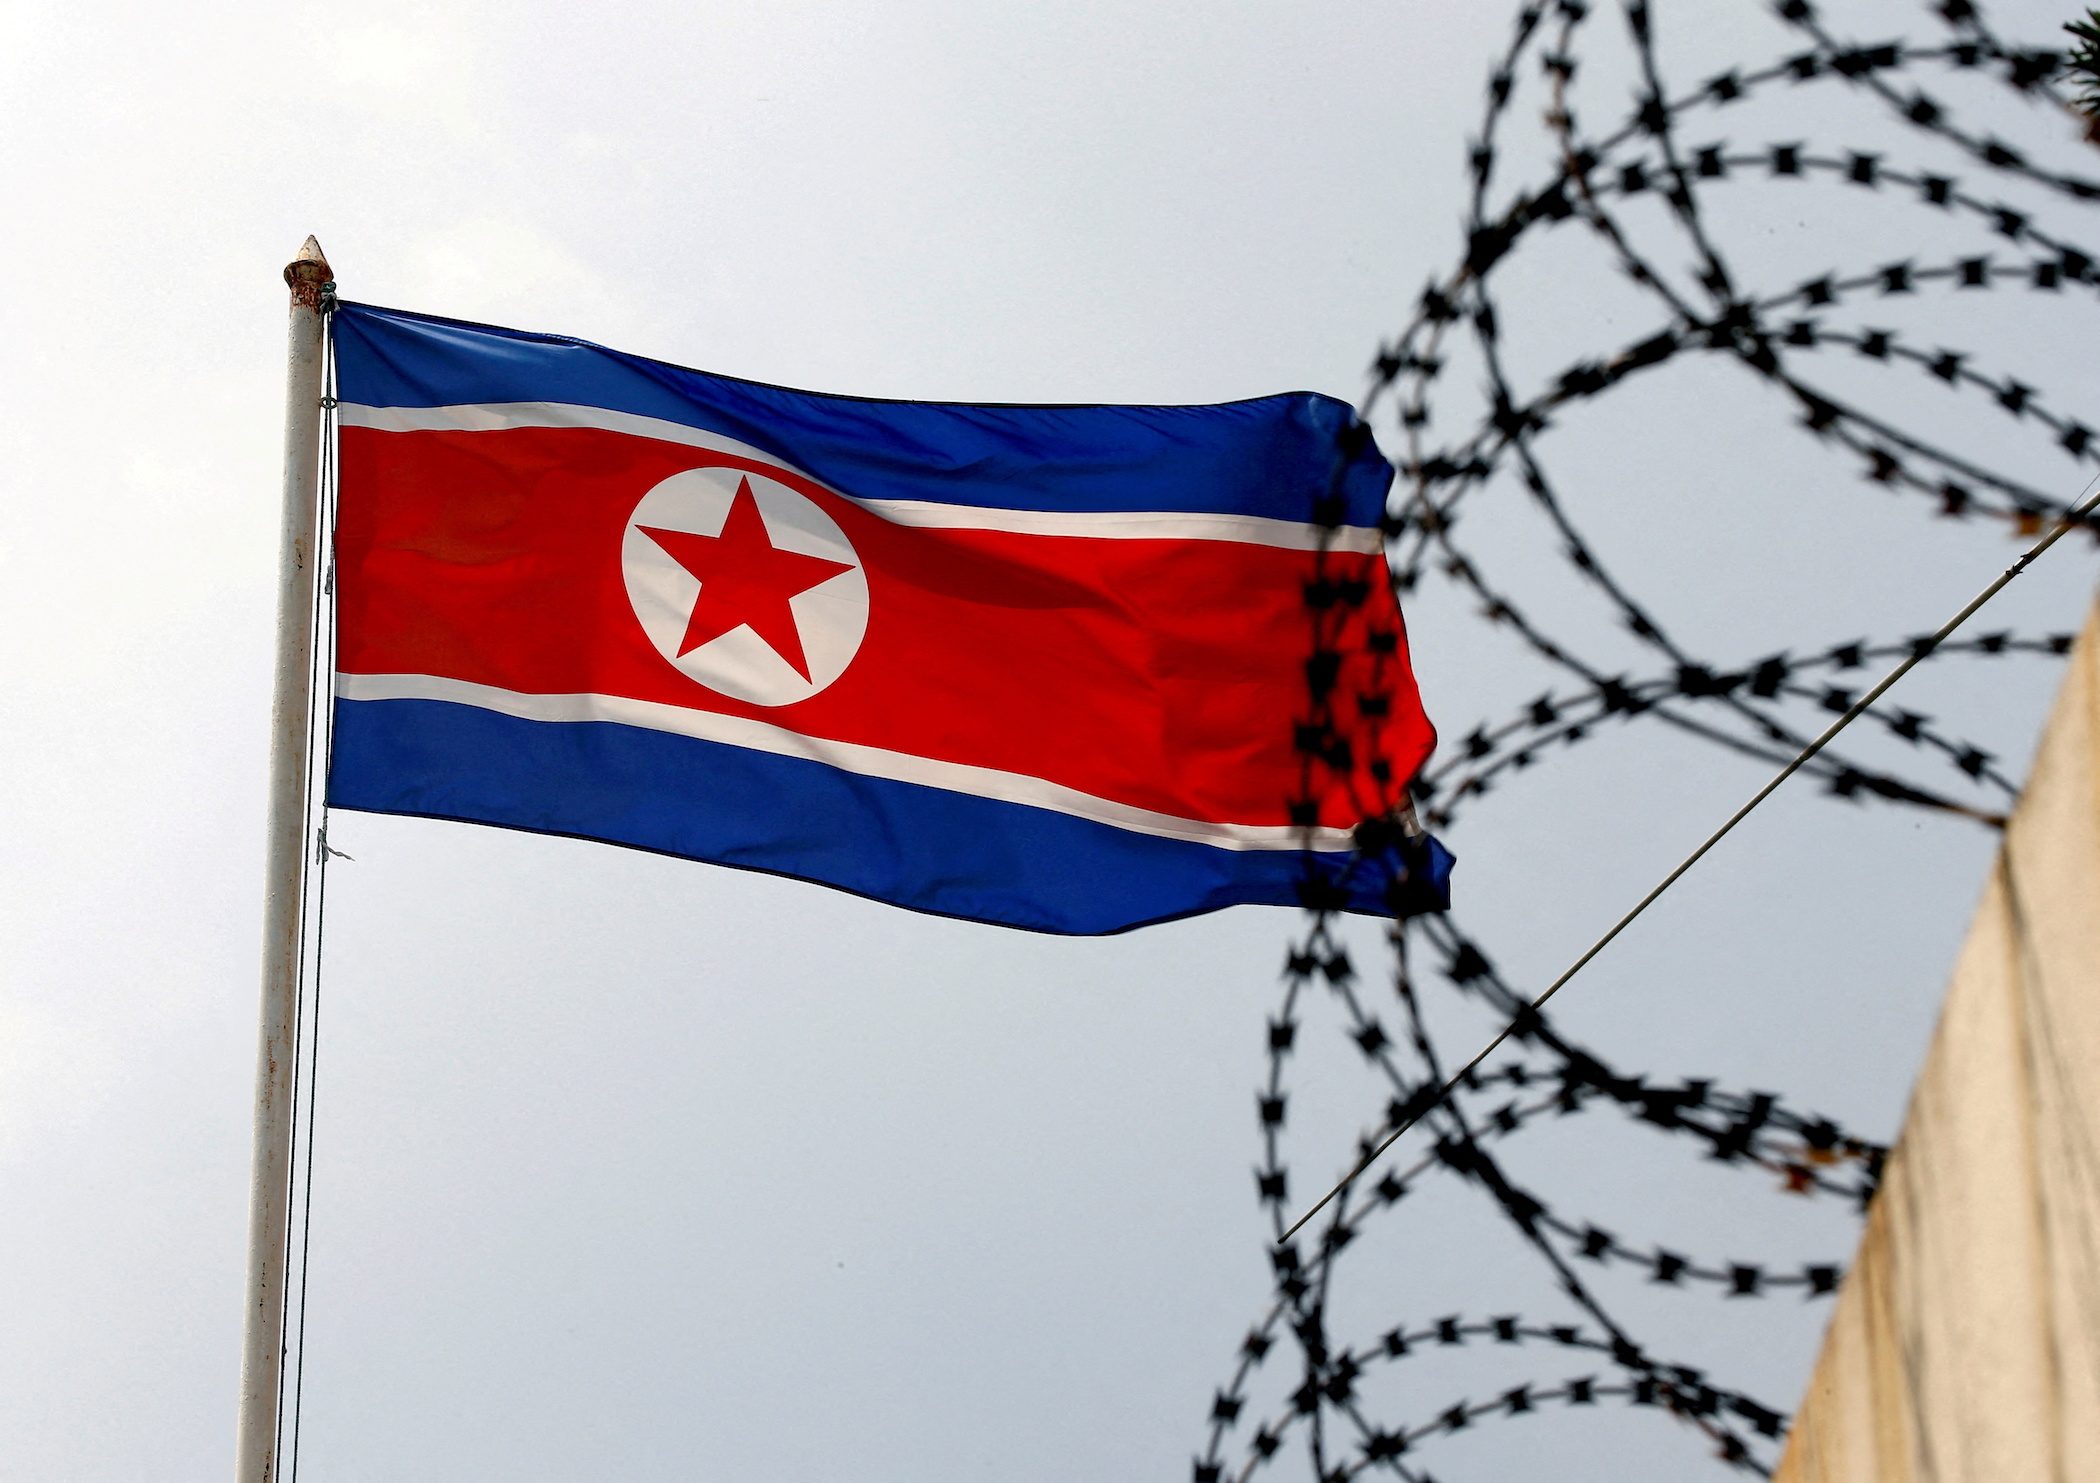 Amid criticism, North Korea takes over as UN disarmament president